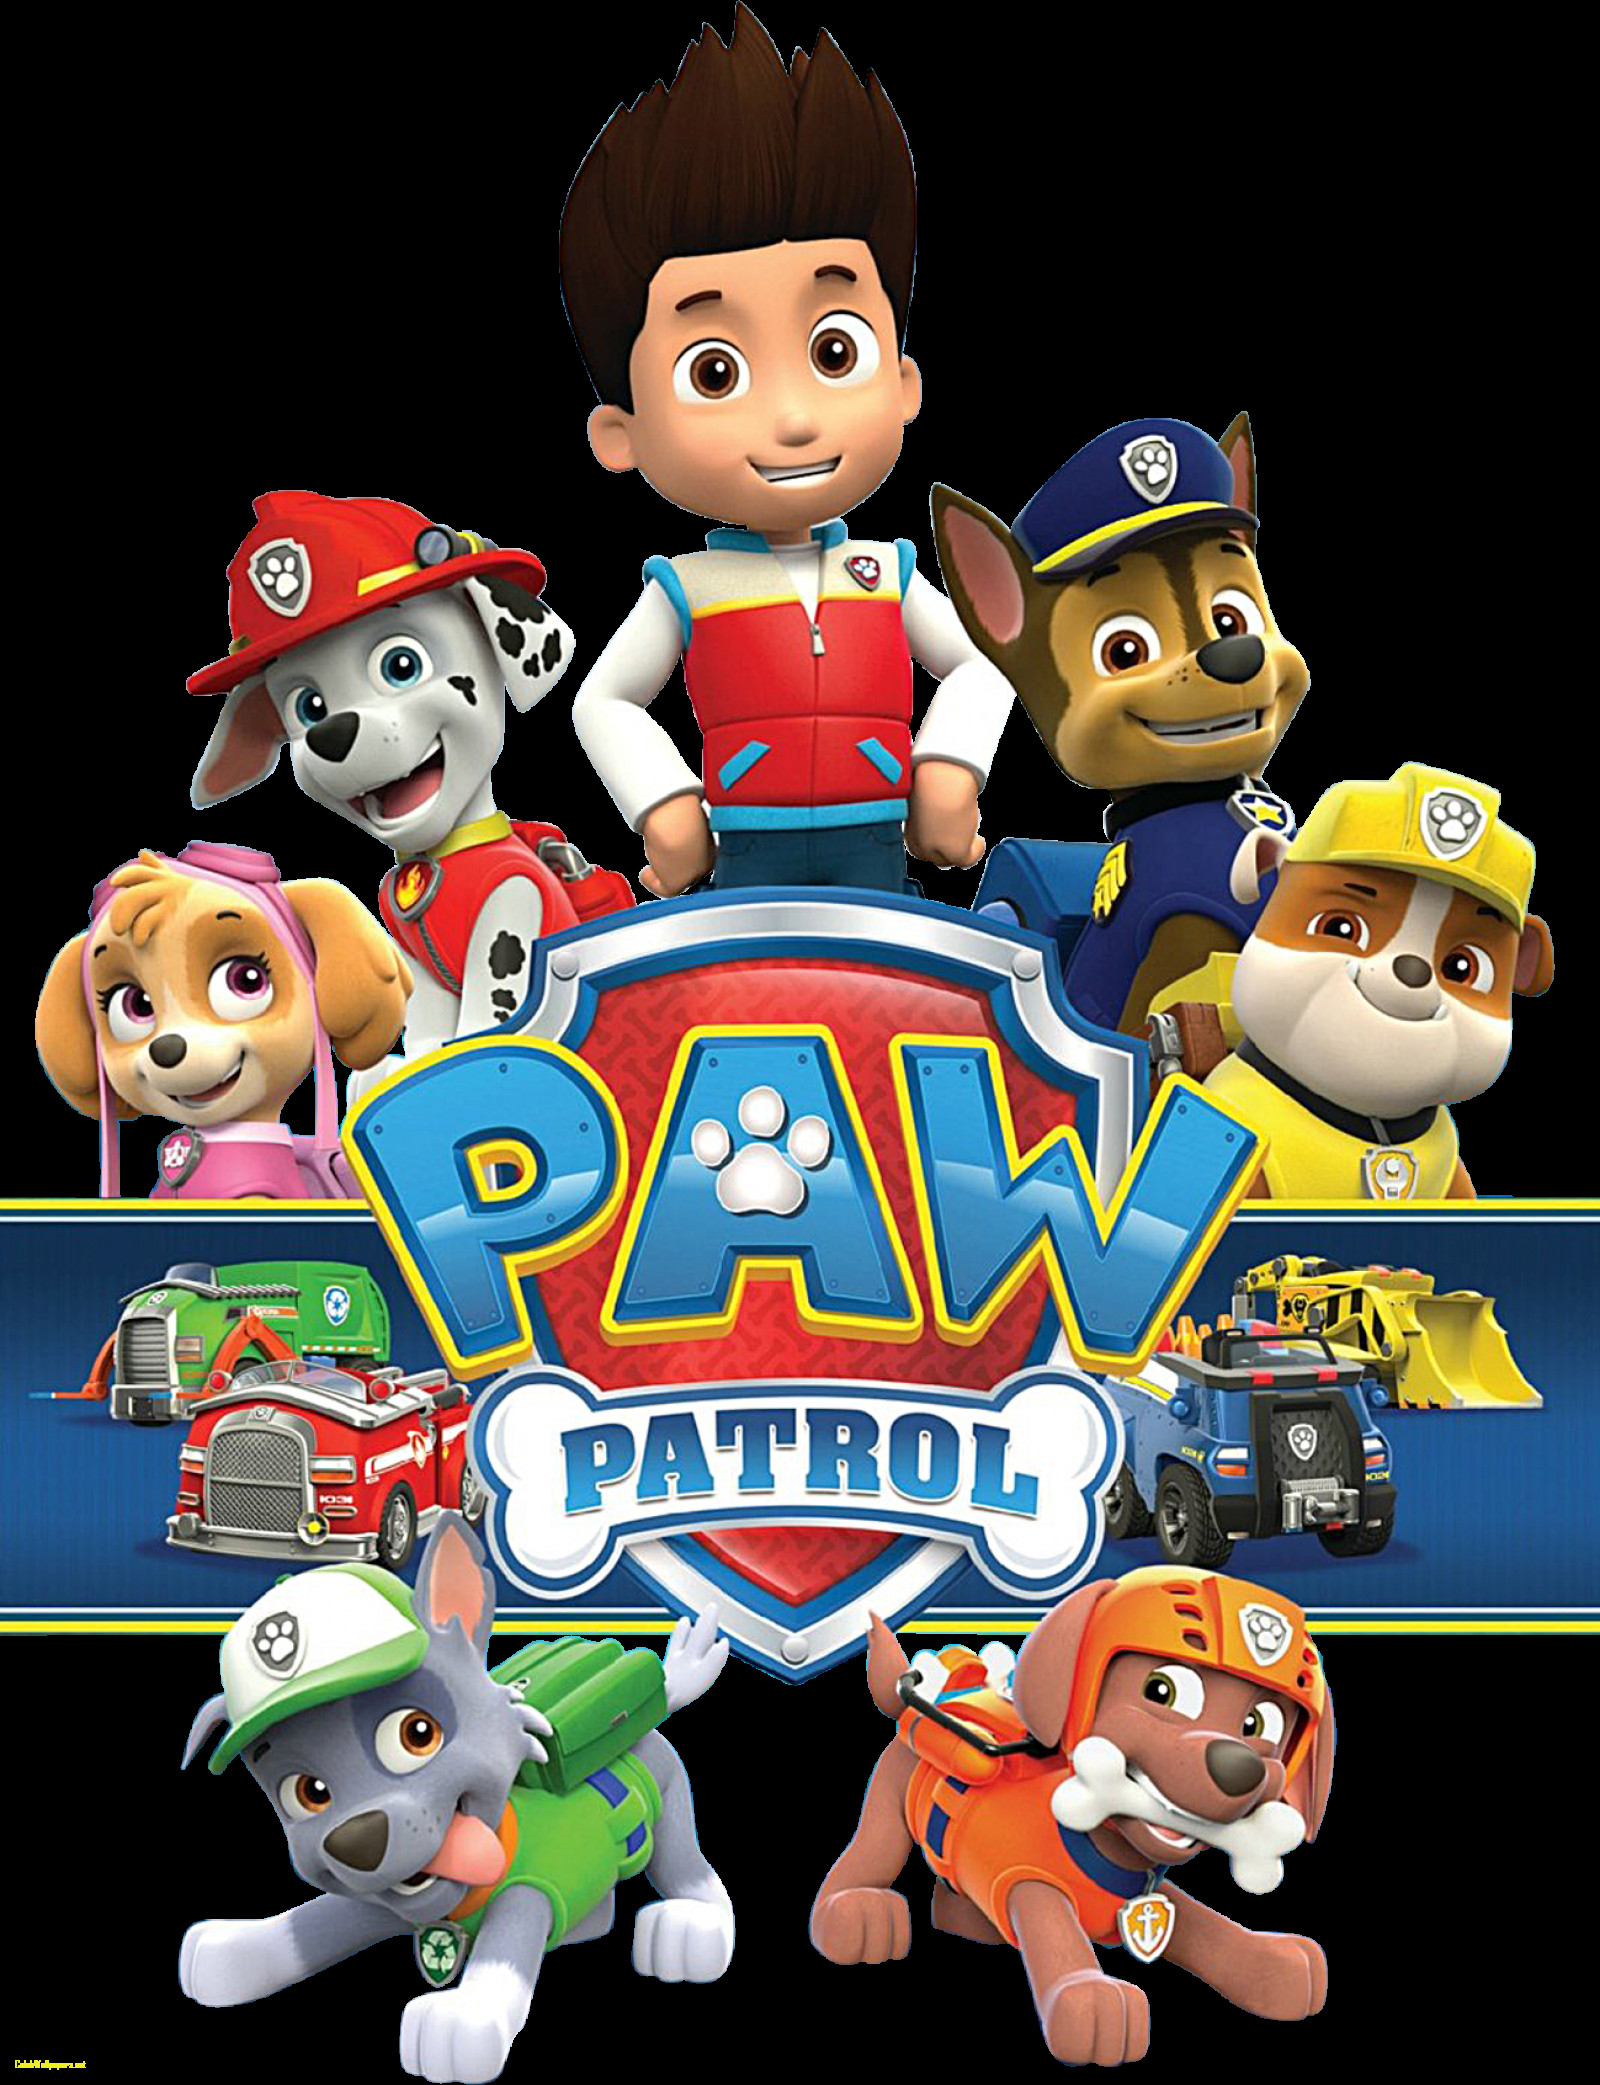 paw patrol wallpaper hd,animated cartoon,cartoon,toy,animation,action figure